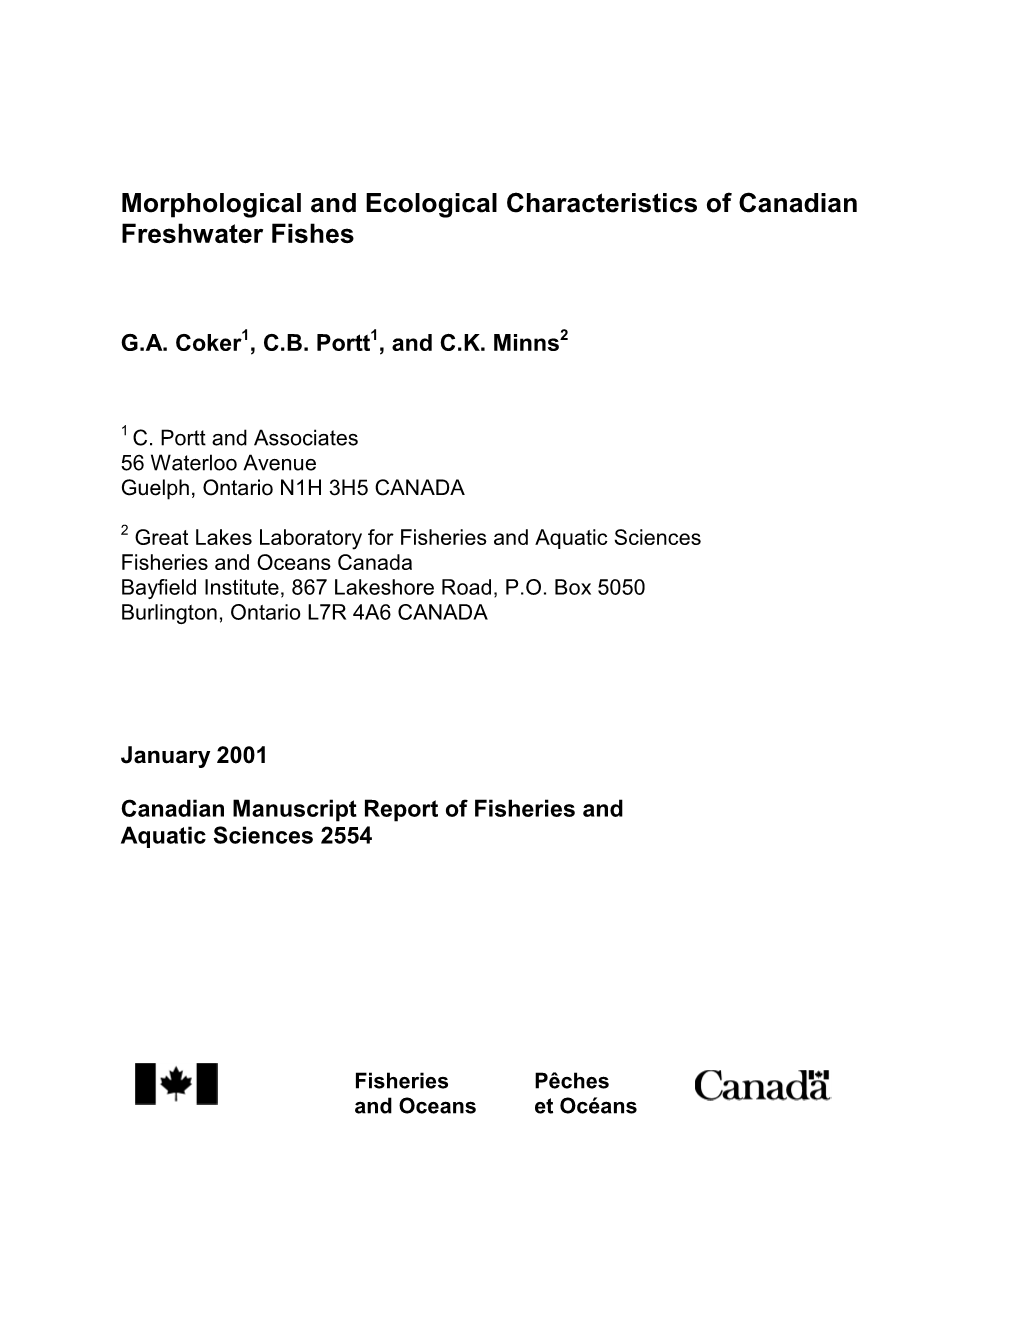 Canadian Manuscript Report of Fisheries and Aquatic Sciences 2554